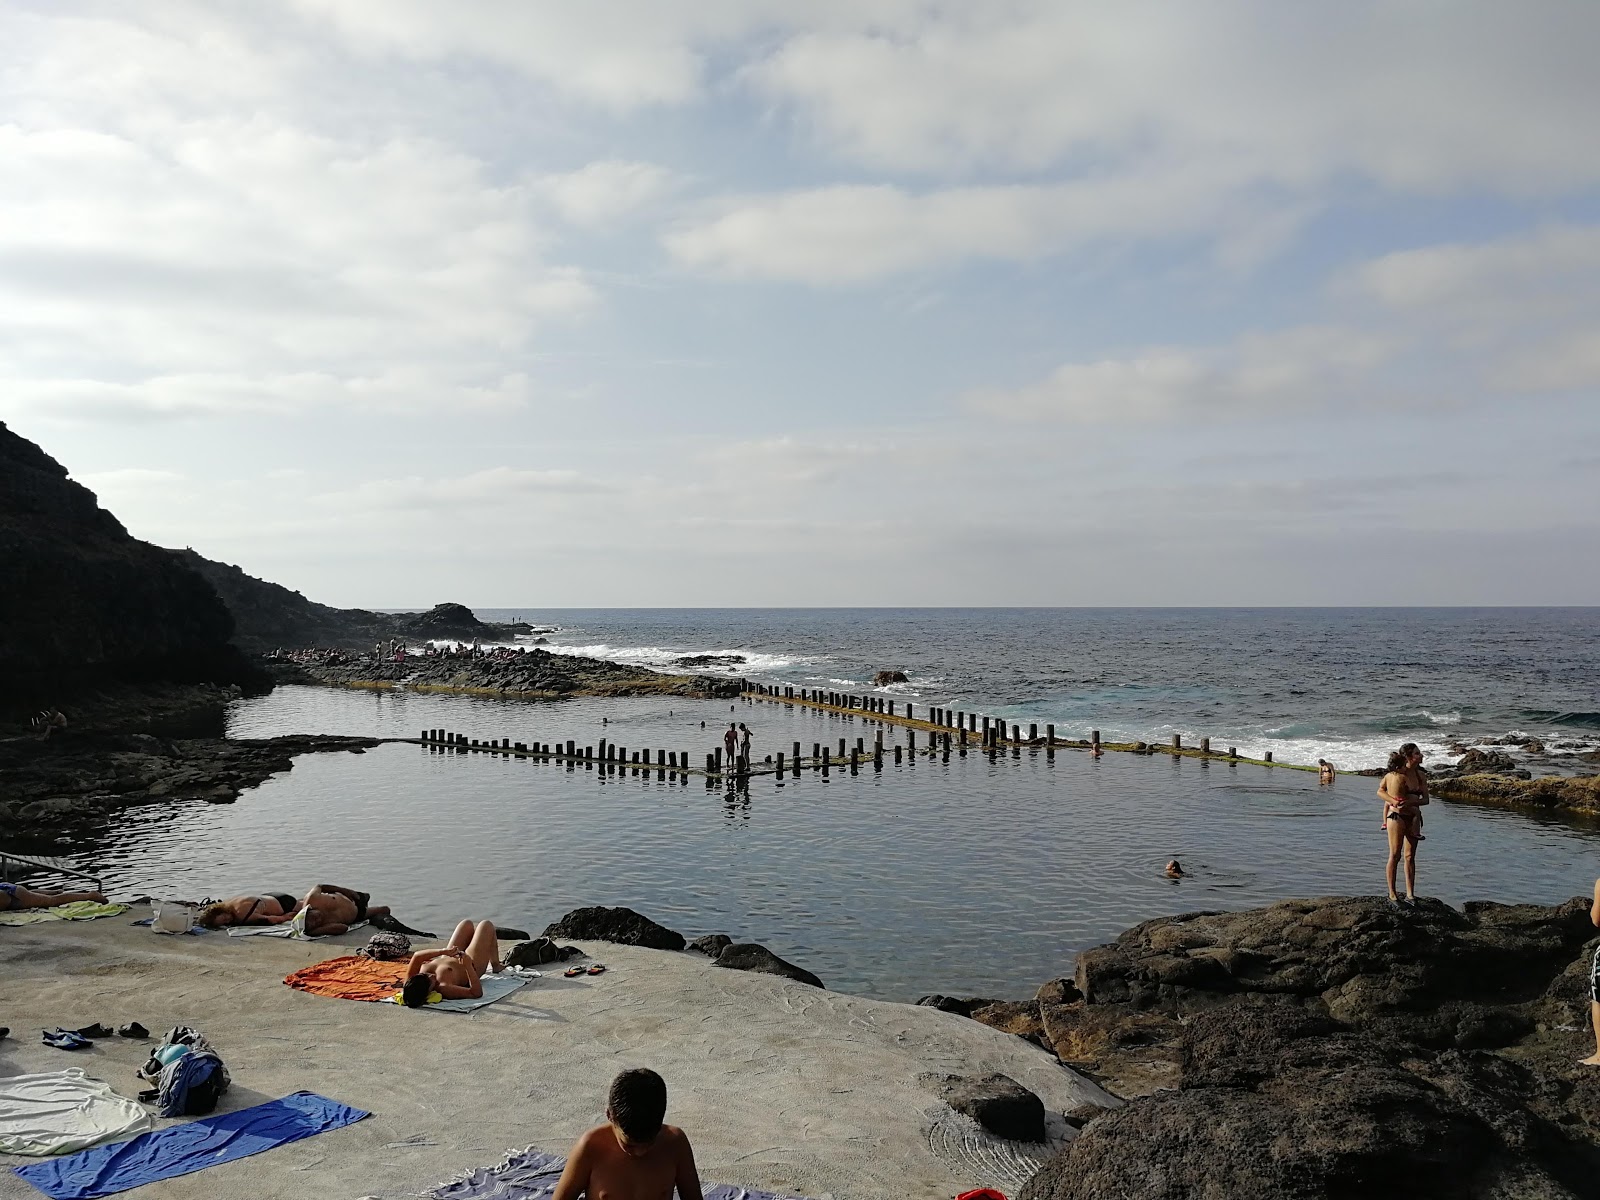 Fotografija Roque prieto pools nahaja se v naravnem okolju